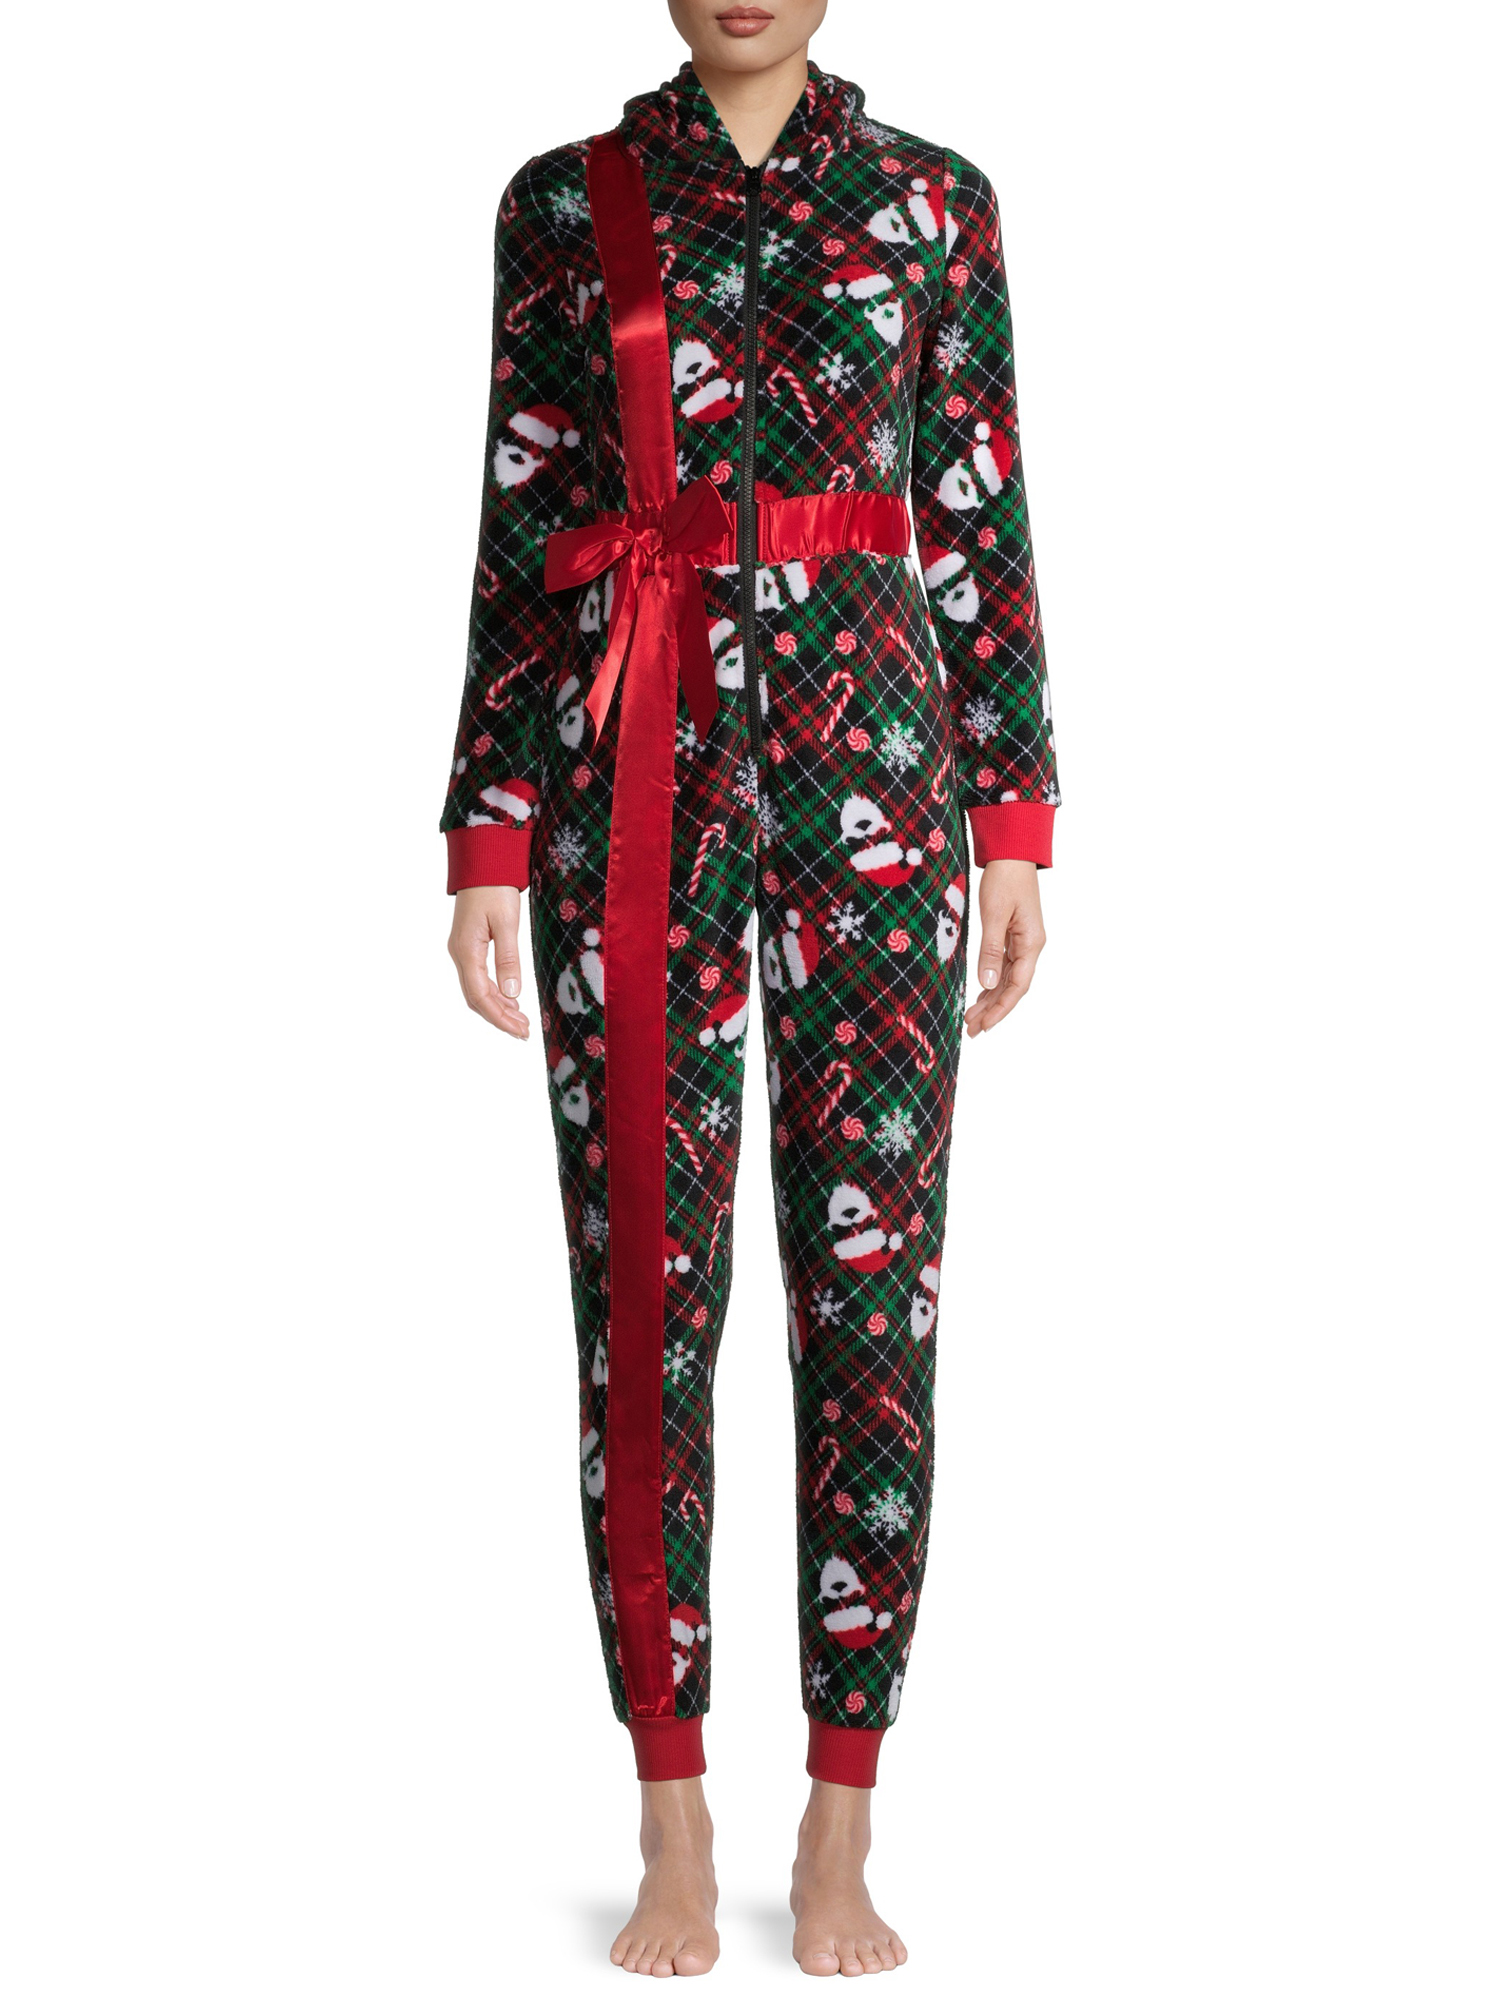 Derek Heart Women's and Women's Plus Christmas Present Pajamas Union Suit - image 1 of 6